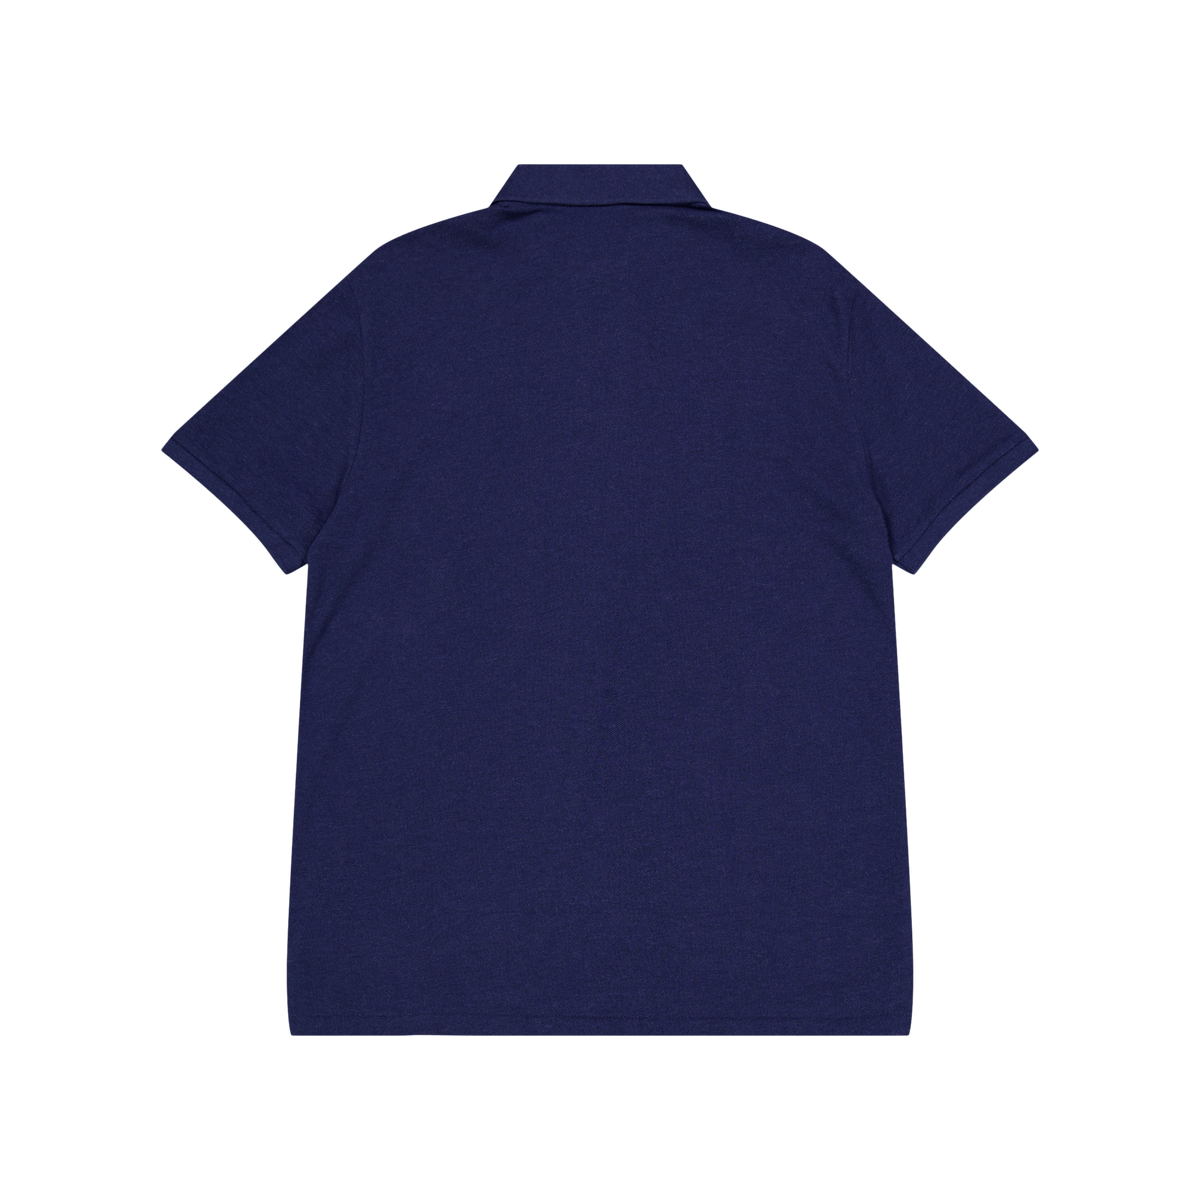 Basic Mesh S/s Polo Shirt 292 Spring Navy Heather/c3958